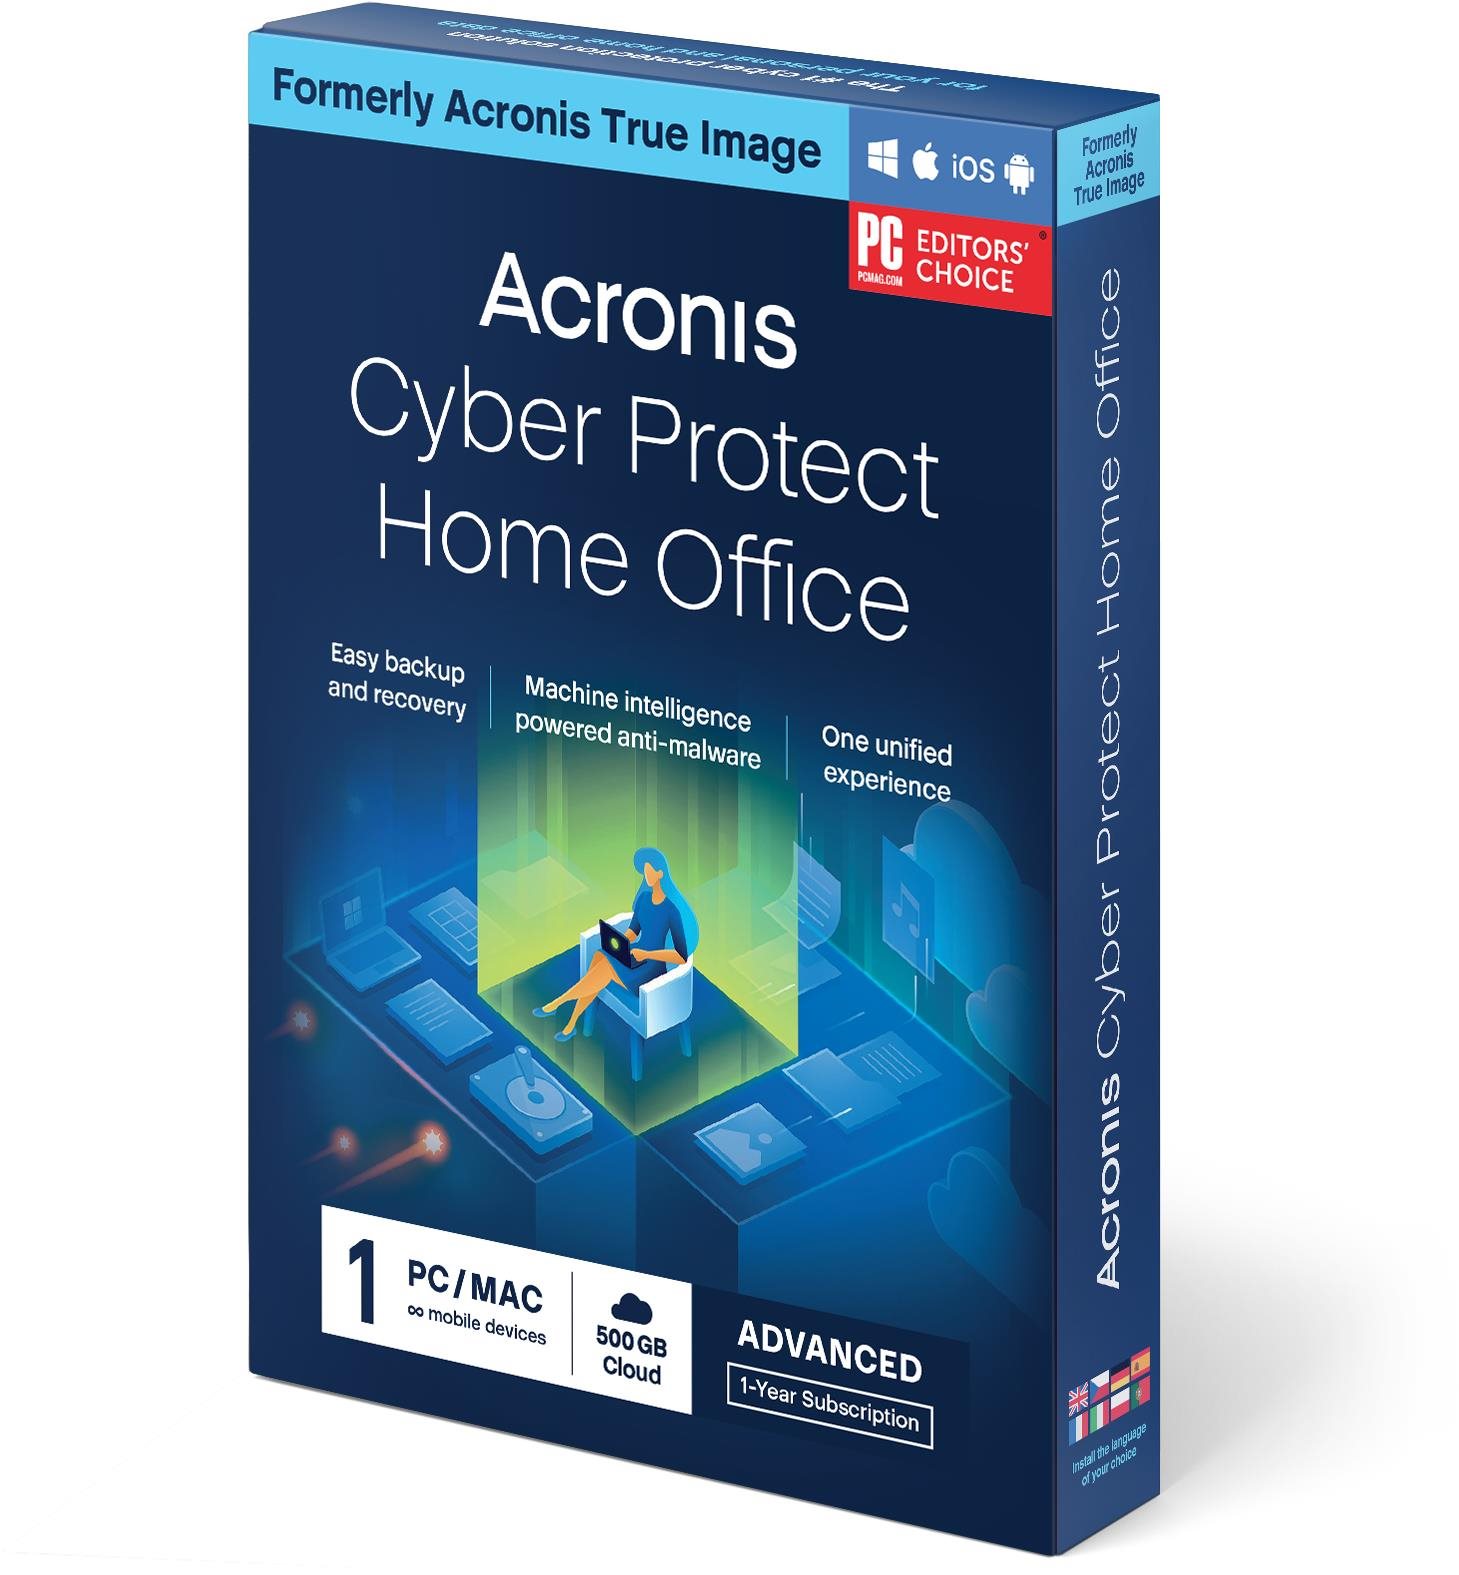 Adatmentő program Acronis Cyber Protect Home Office Advanced 1 PC-re 1 évre + 500 GB Acronis Cloud Storage (electro)